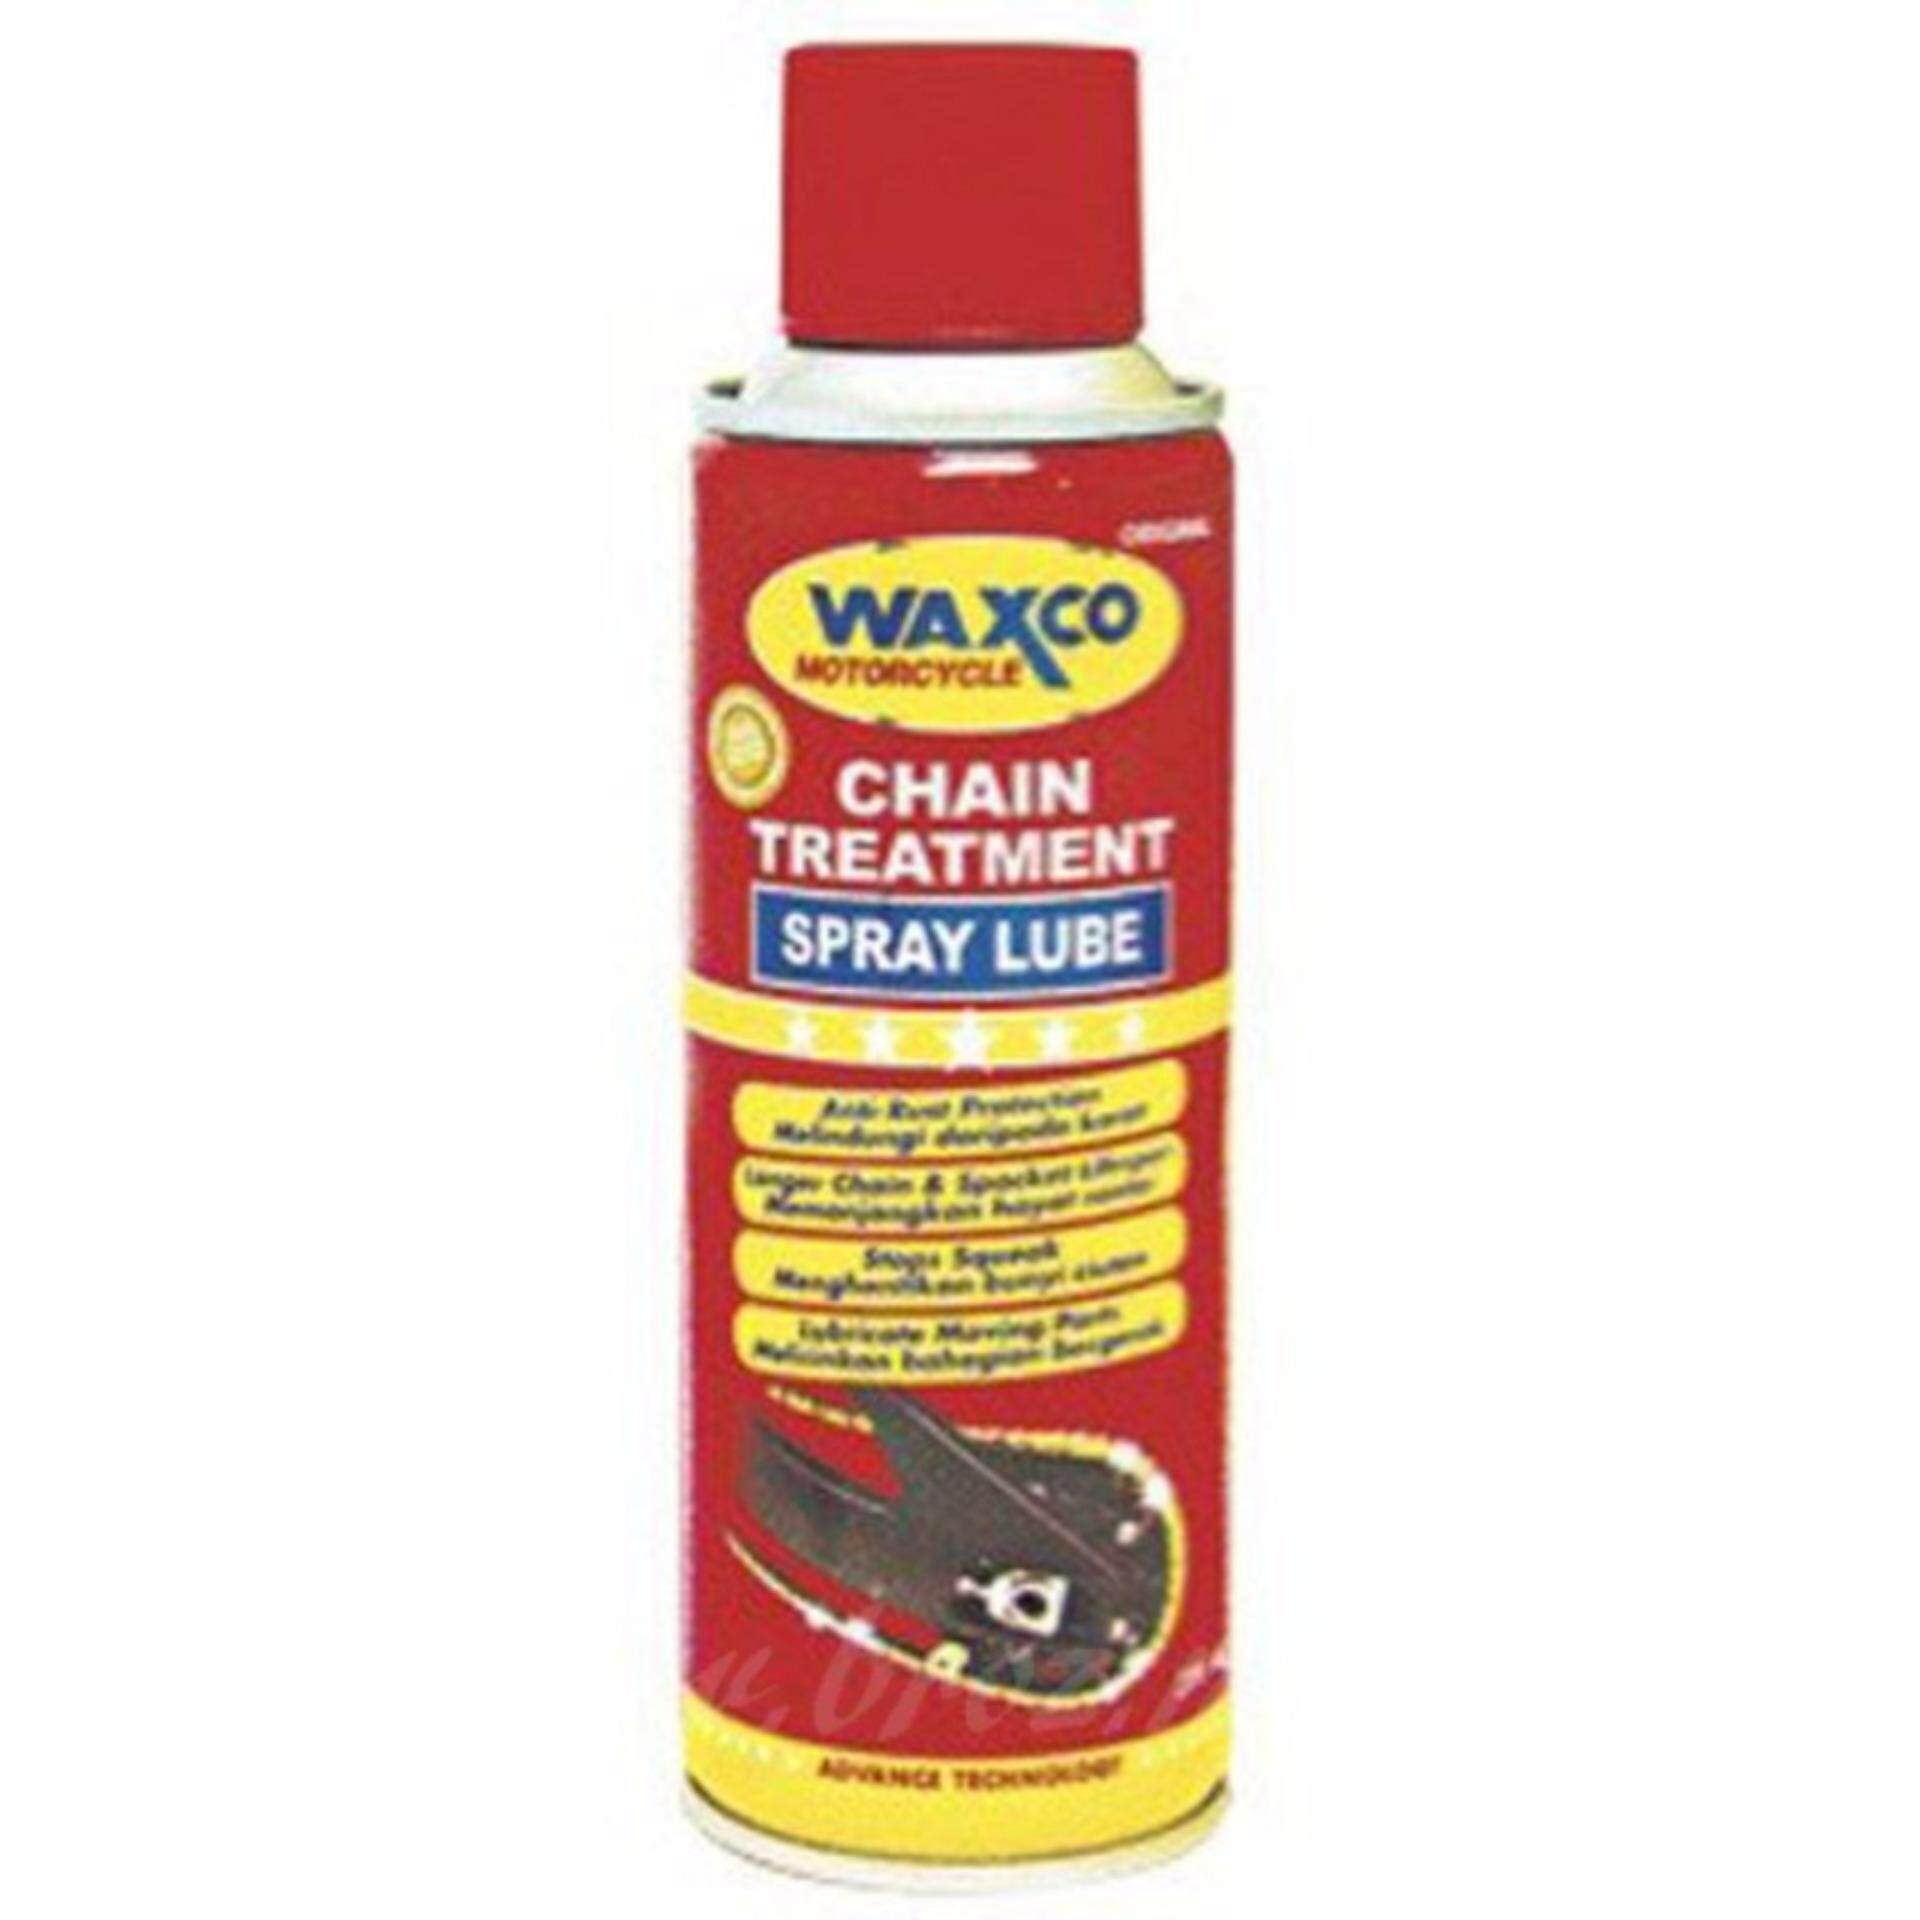 Waxco Motorcycle Chain Treatment Spray Lube